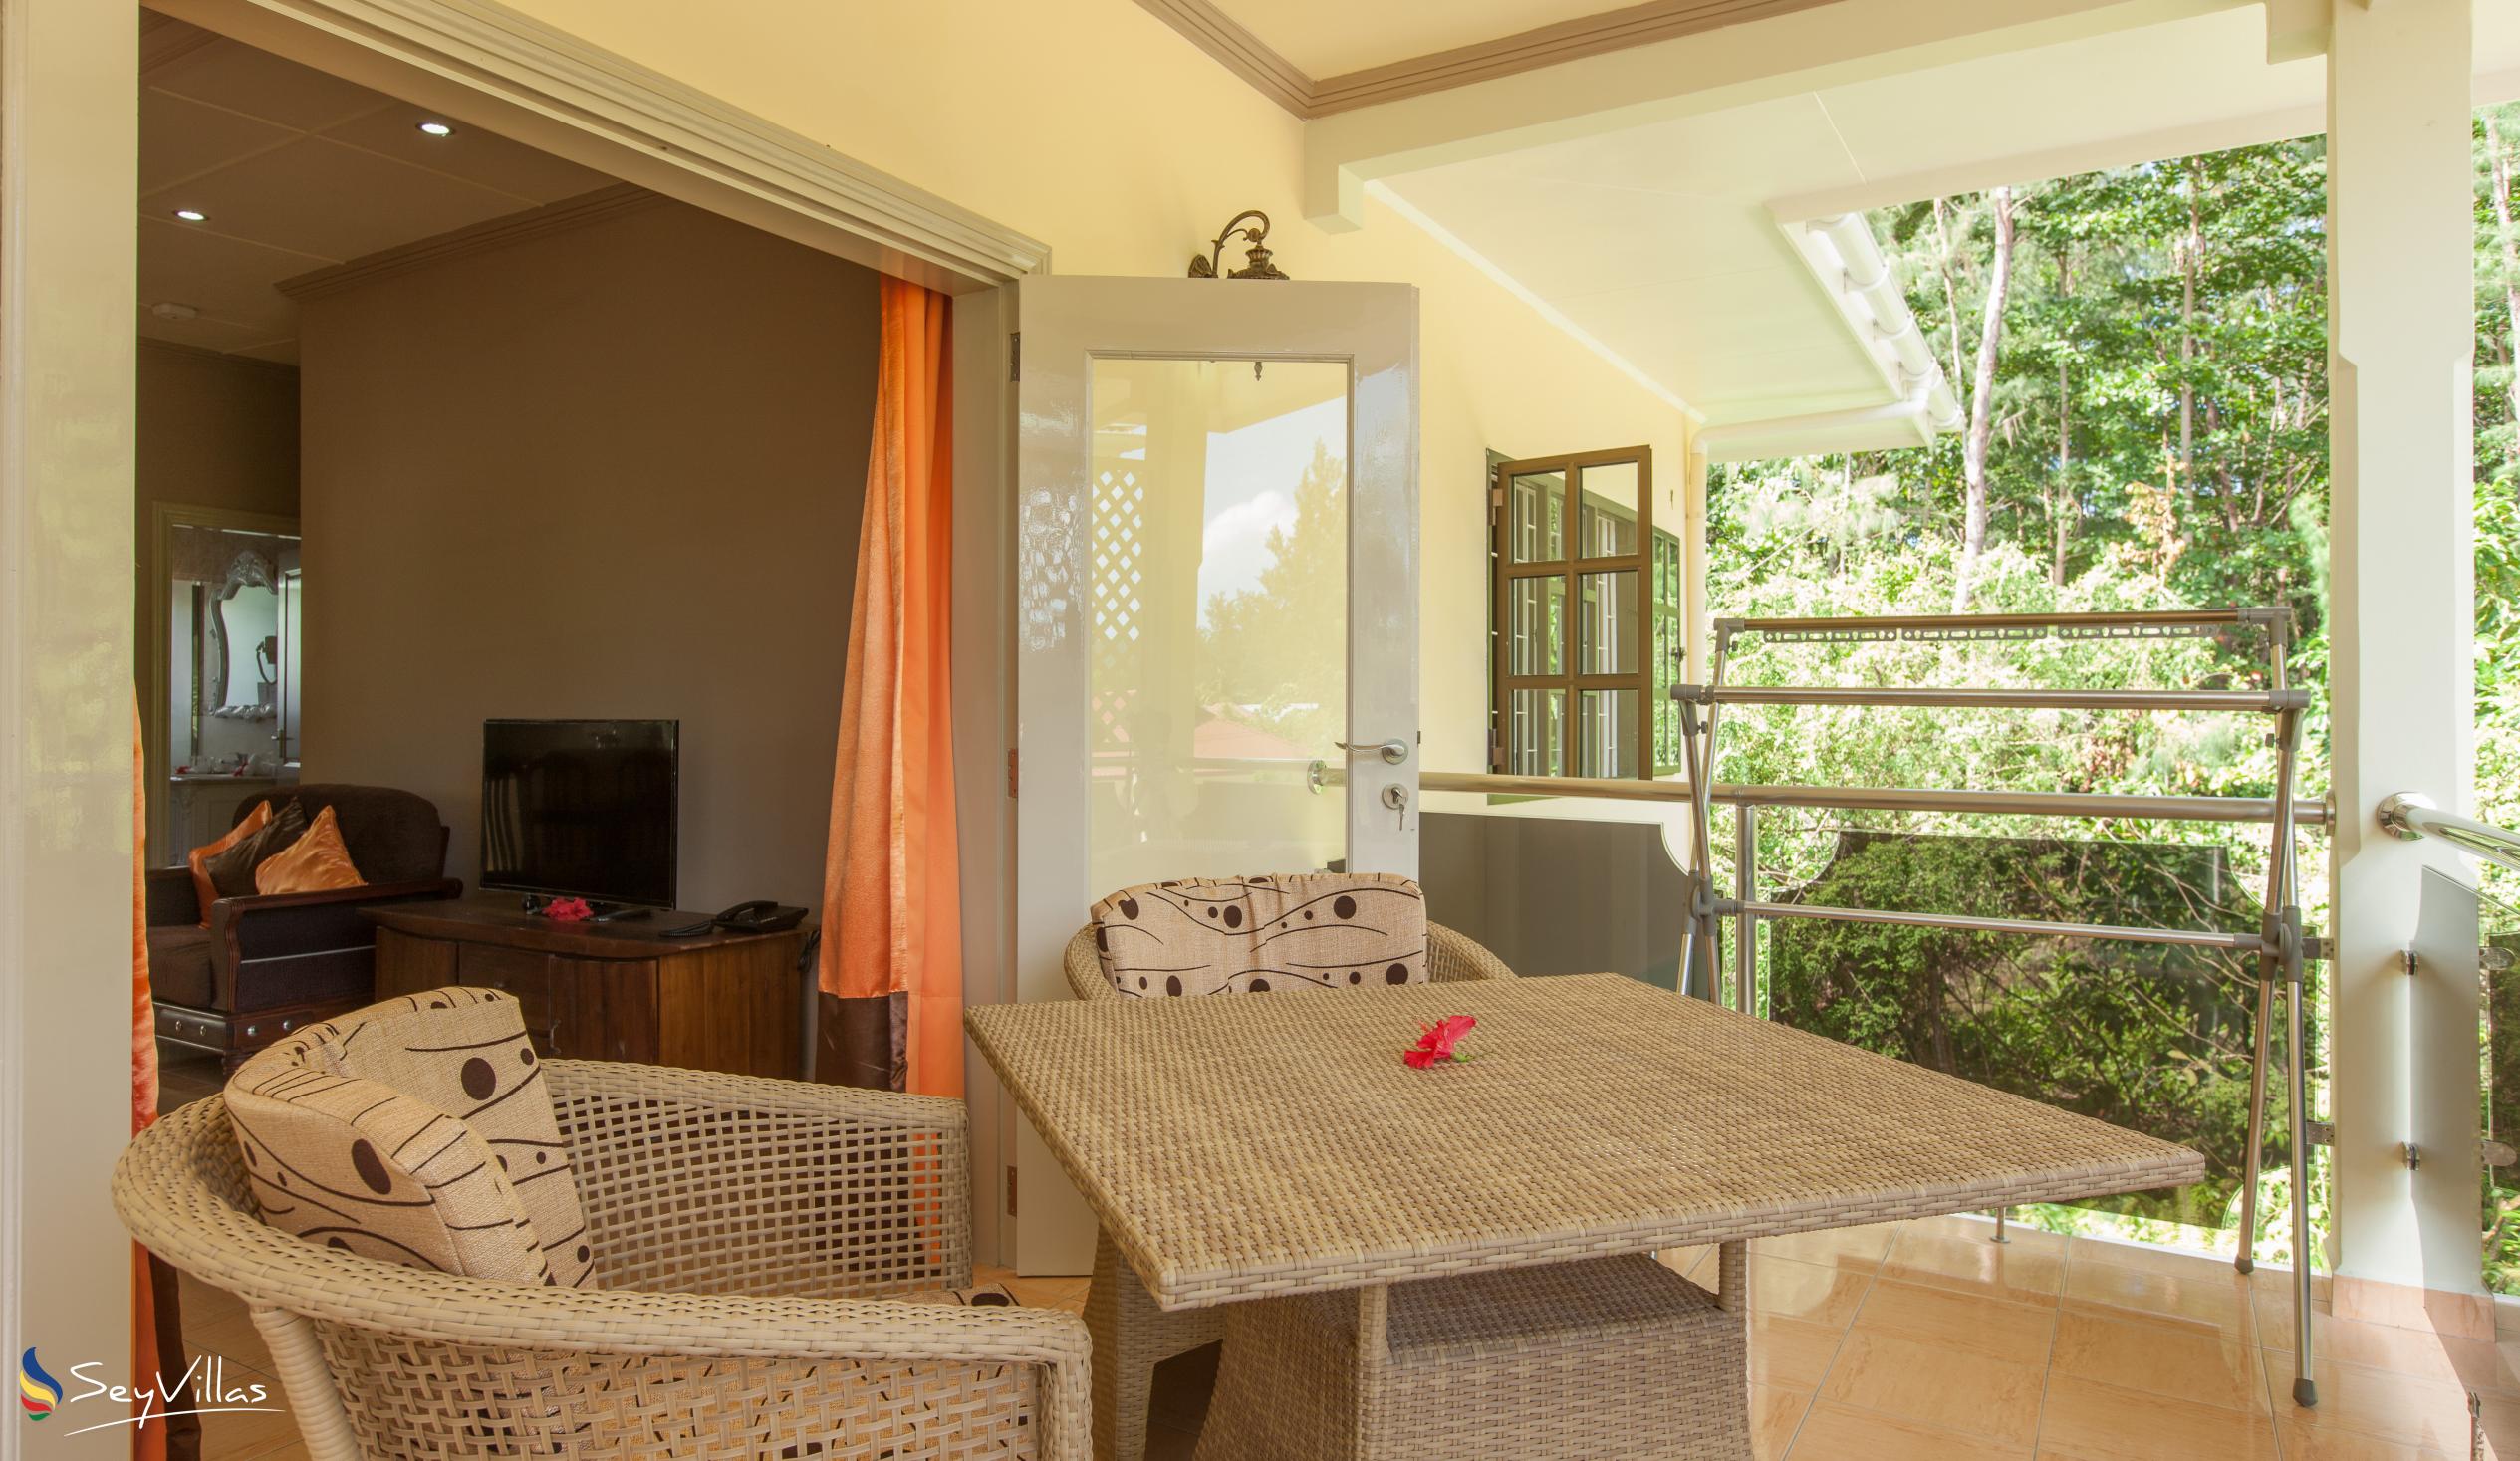 Foto 88: Chez Bea Villa - Appartement 1 chambre - Praslin (Seychelles)